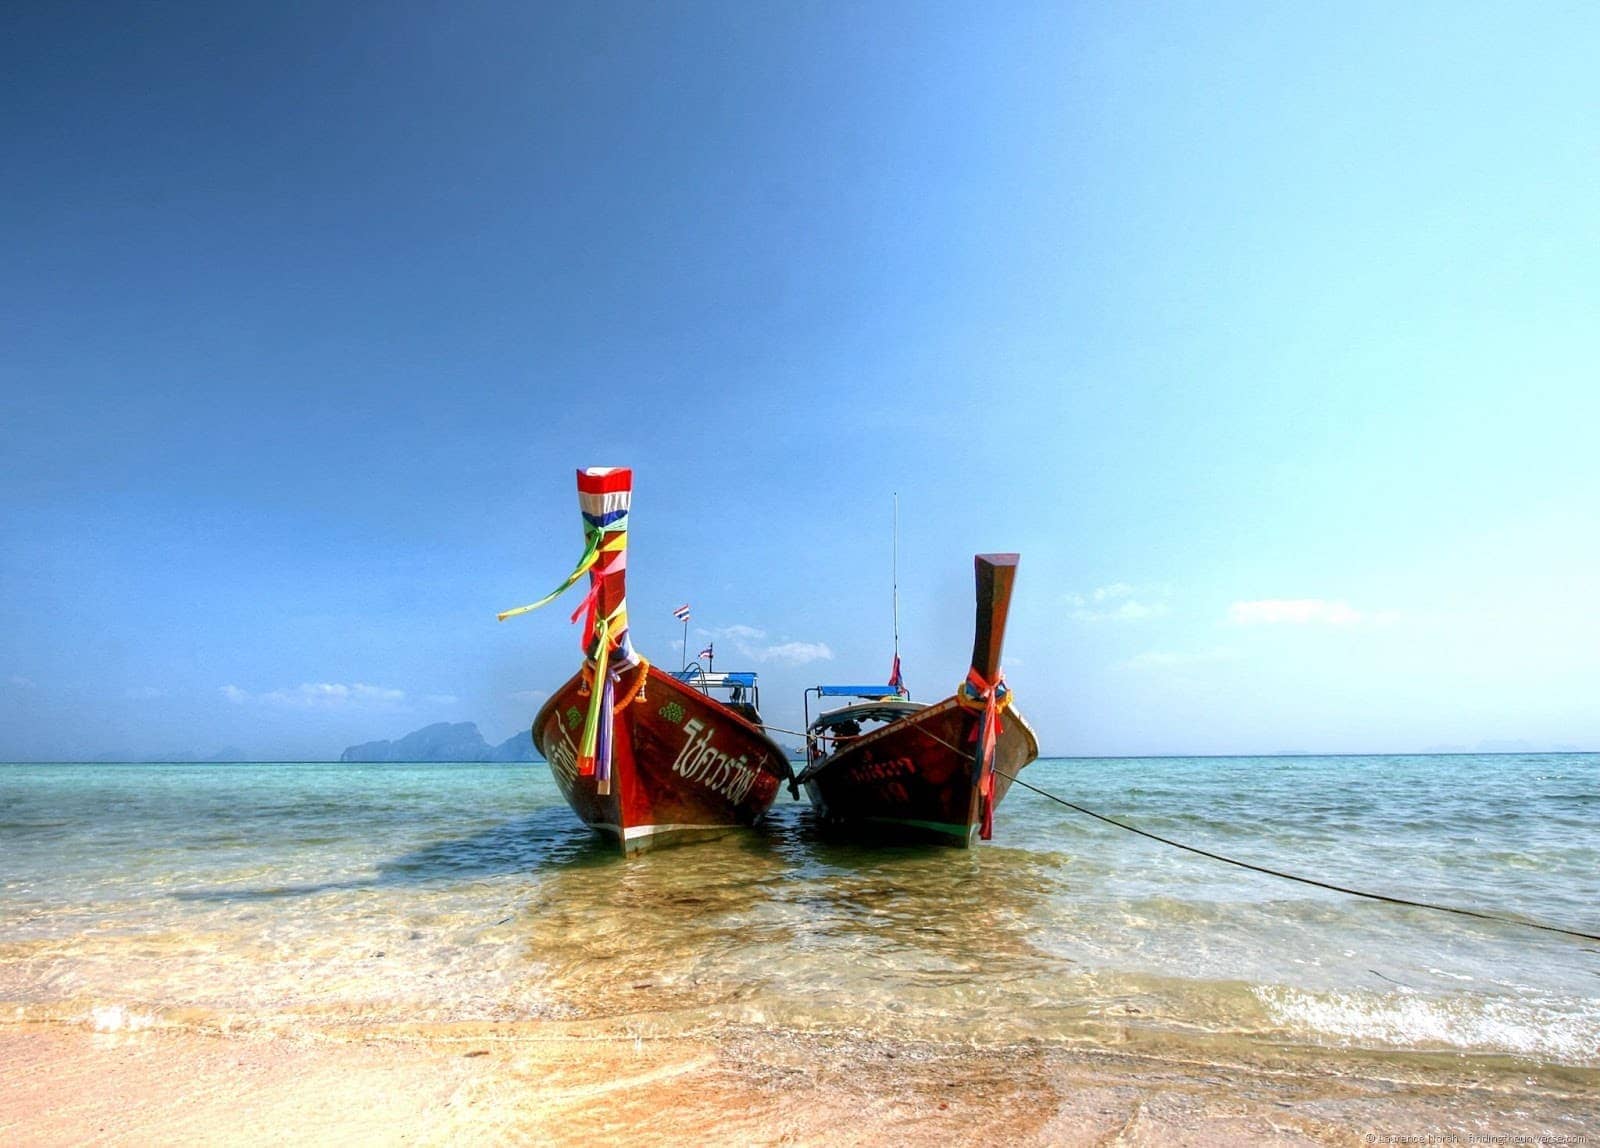 Islands and boats: Exploring Thailand’s Trang coastline